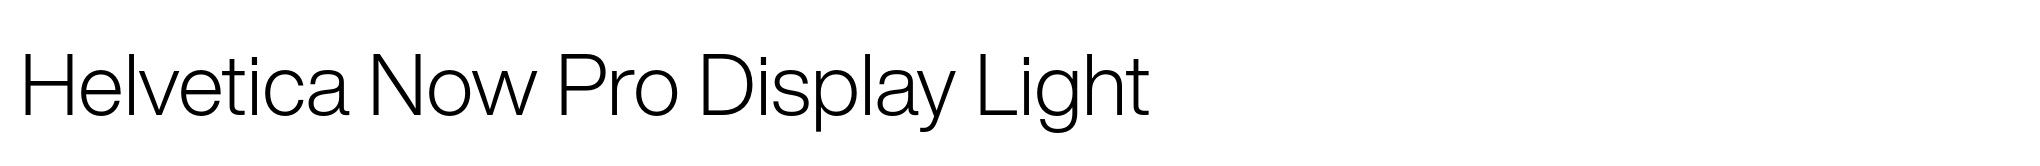 Helvetica Now Pro Display Light image